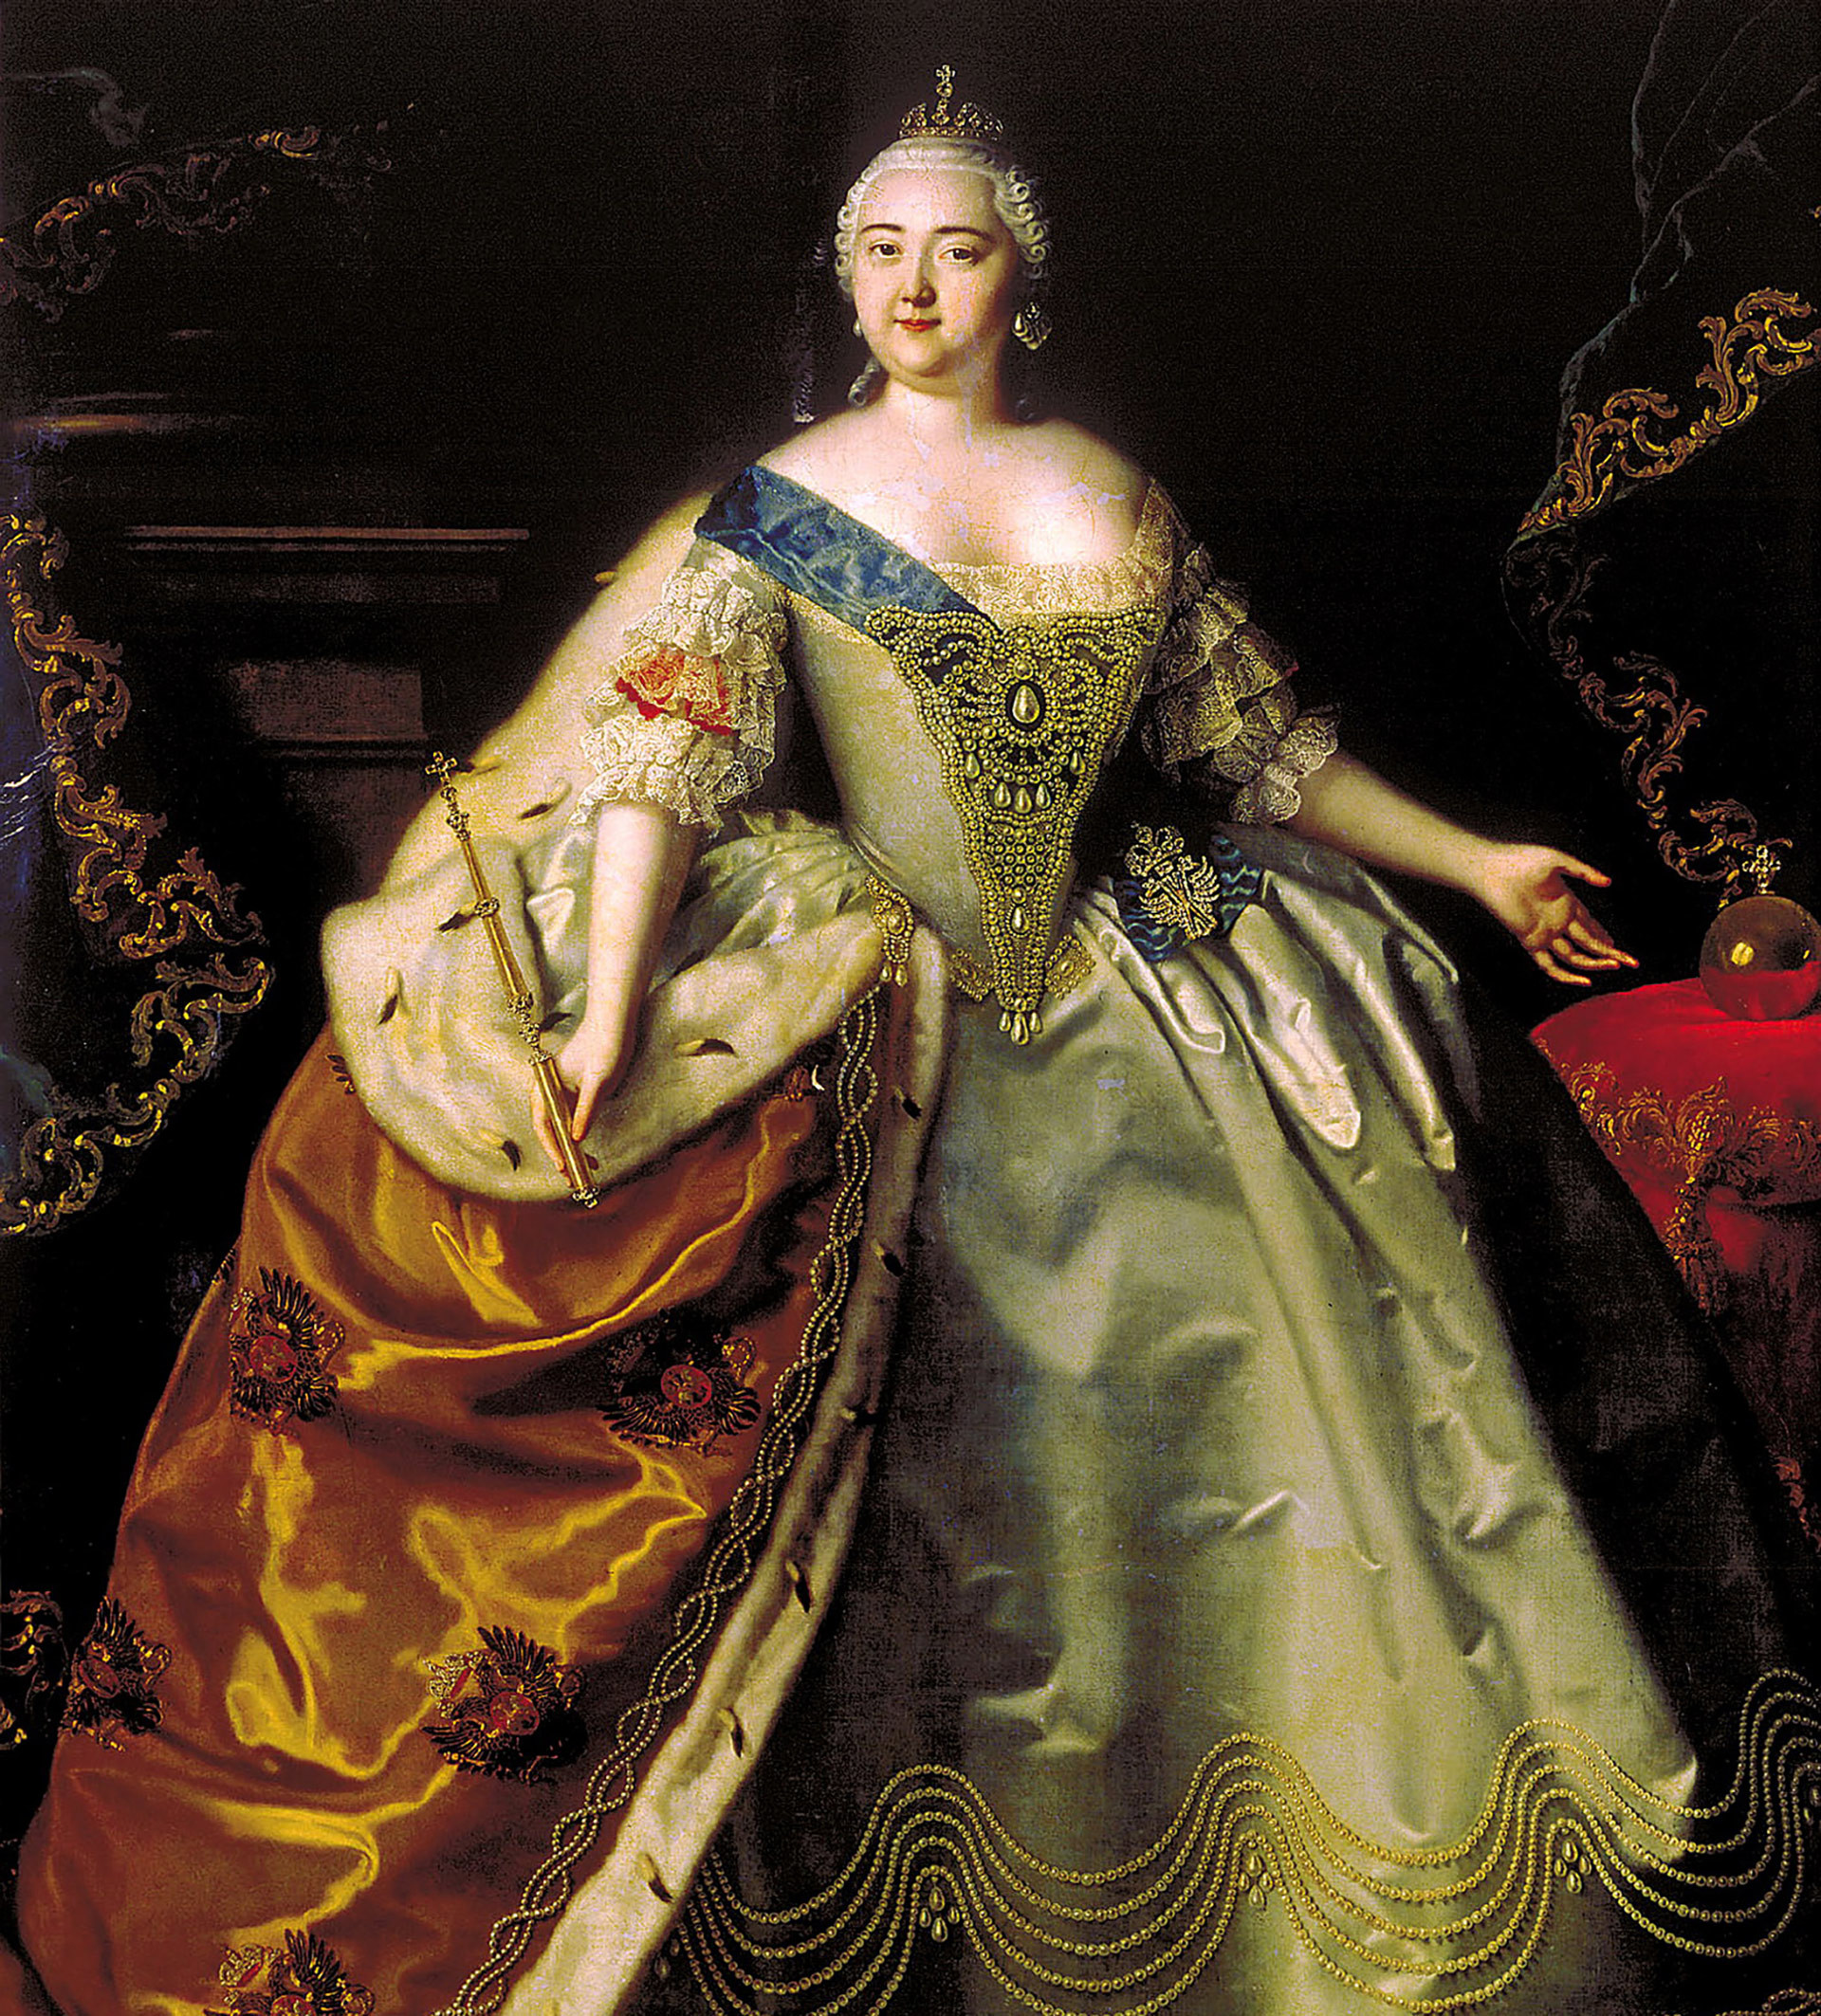 Portrait of Empress Elizabeth I of Russia by Louis Caravaque.